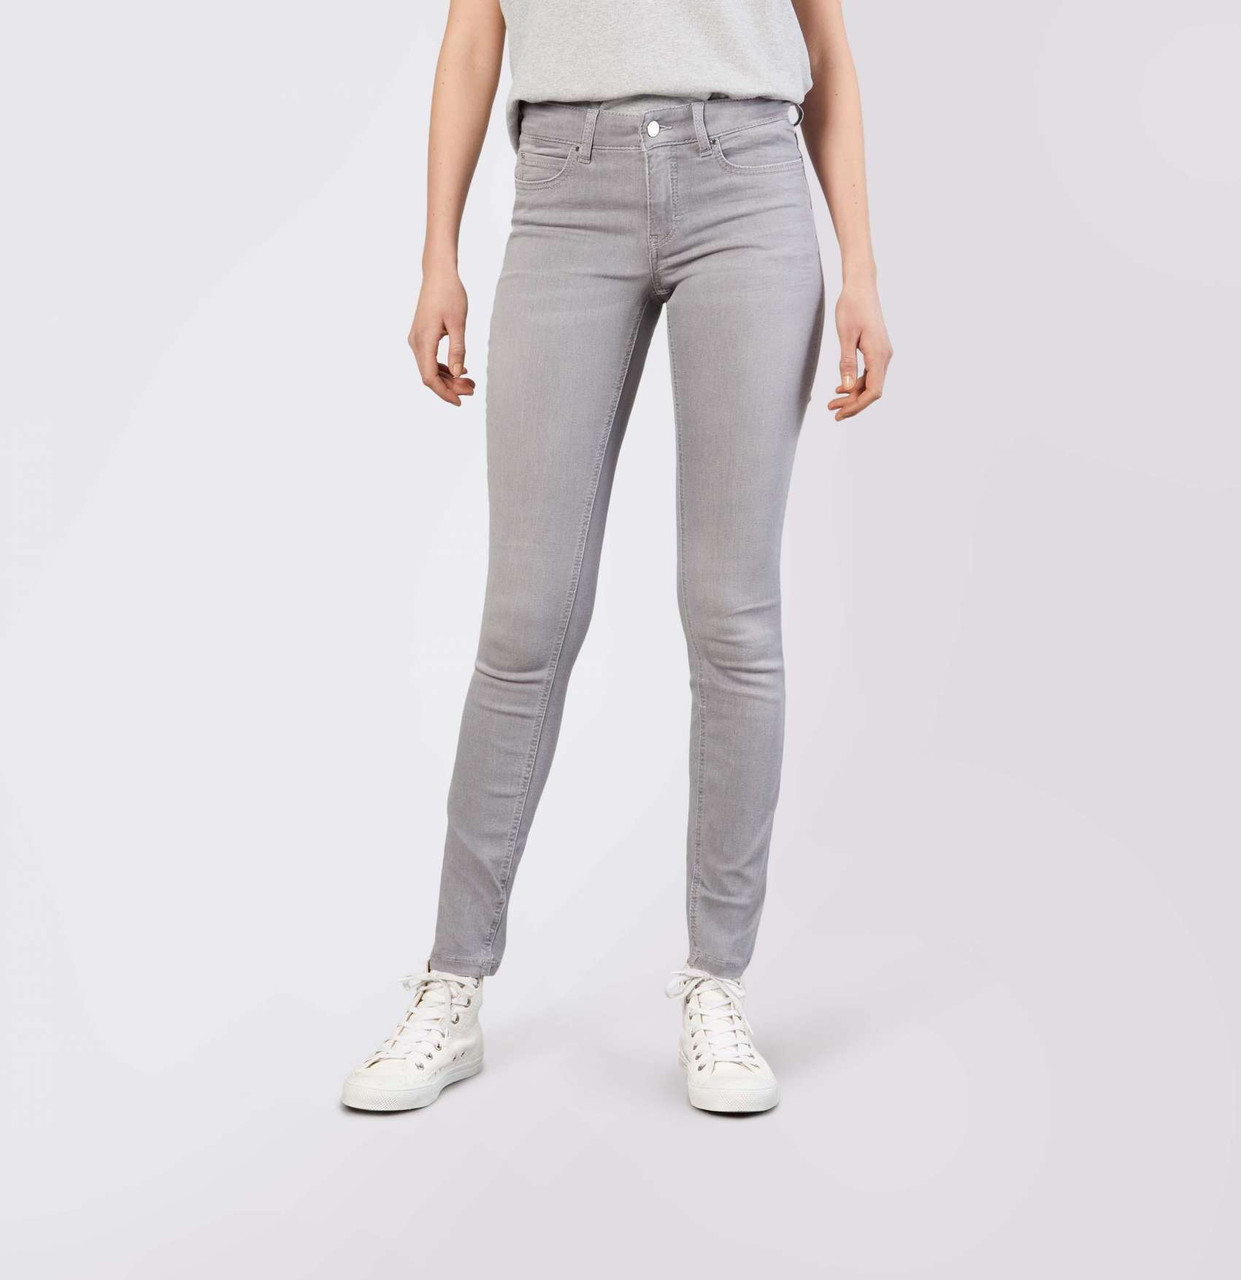 MAC Dream Skinny Jeans Wash Grey in Upcoming